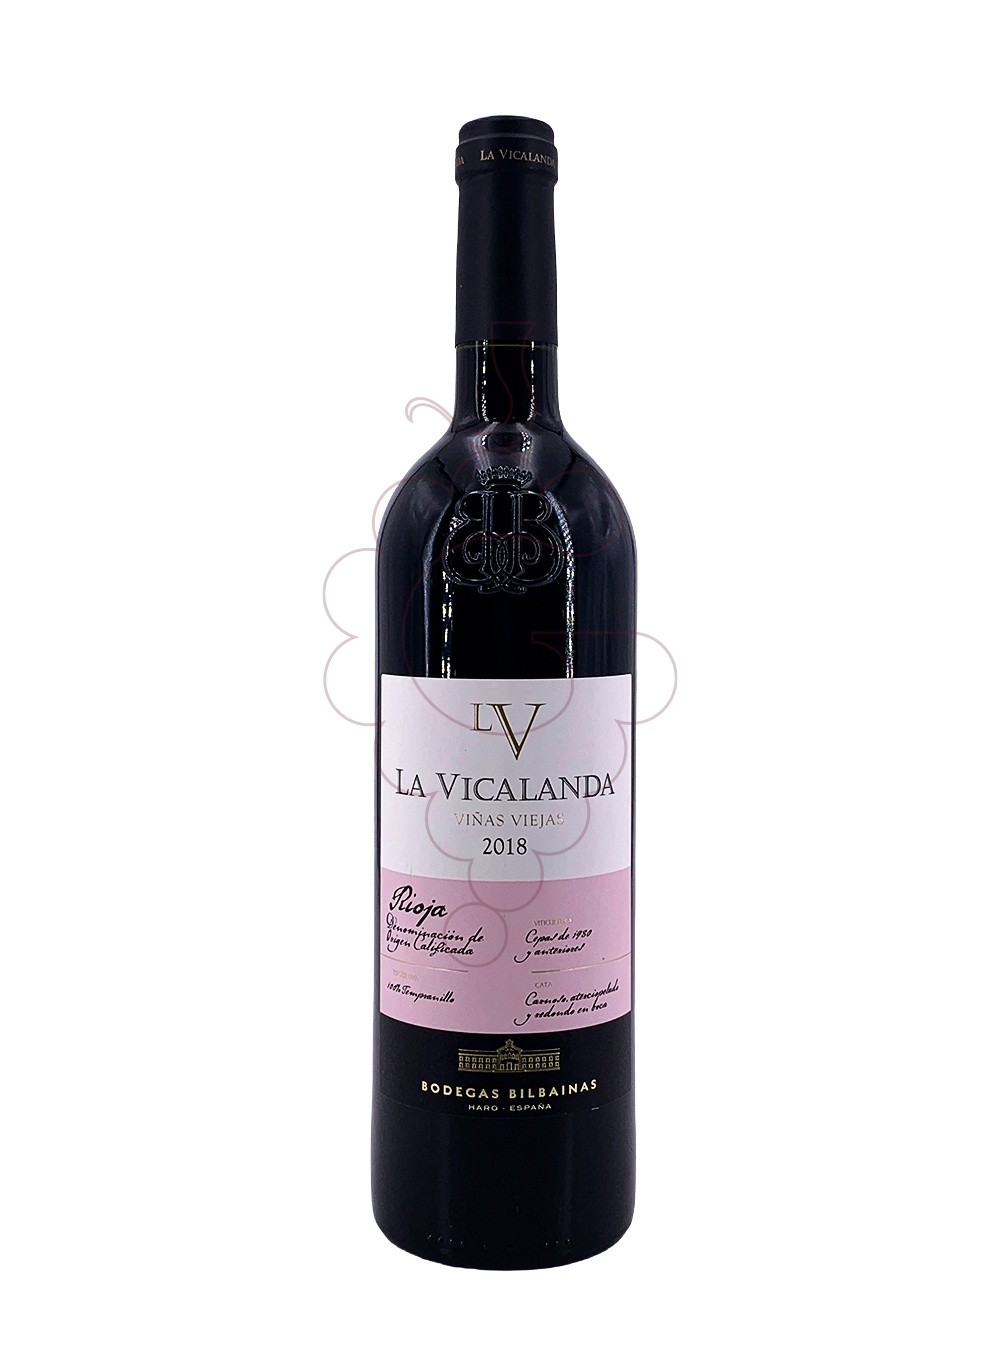 Photo La vicalanda vi?as viejas 2018 vin rouge